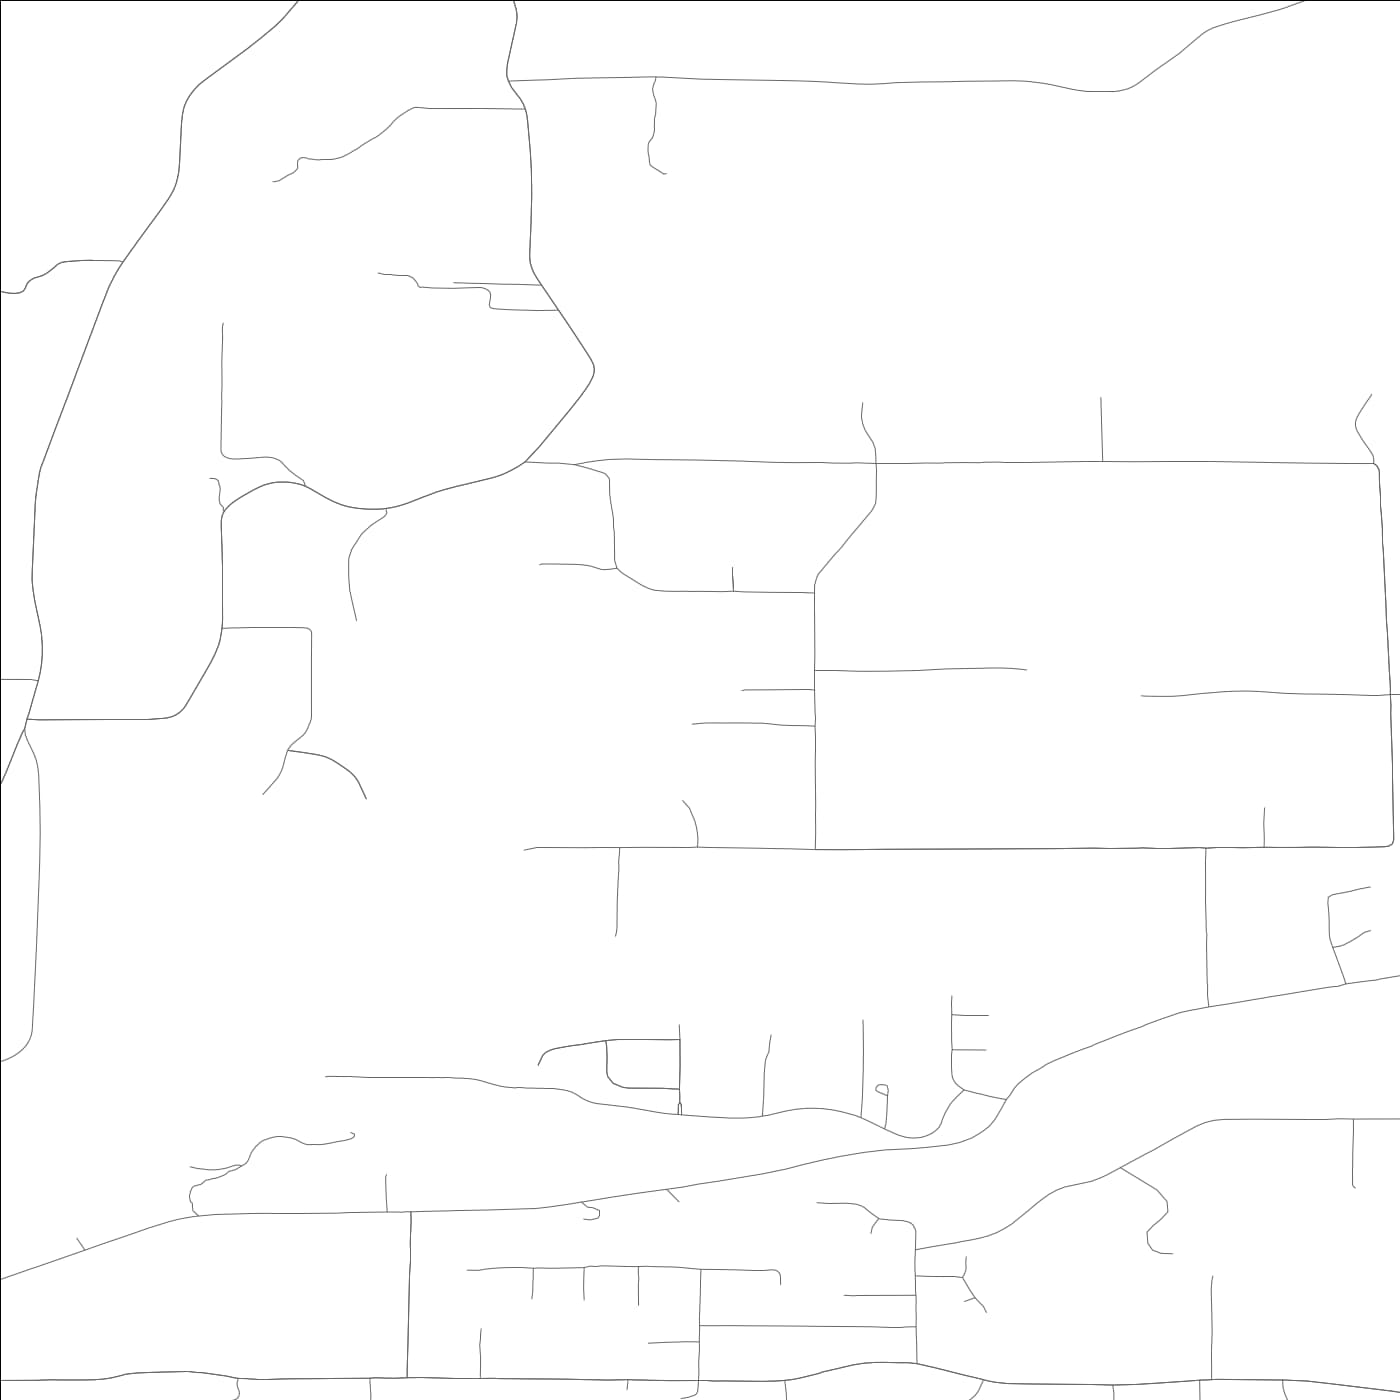 ROAD MAP OF WOODS CREEK, WASHINGTON BY MAPBAKES